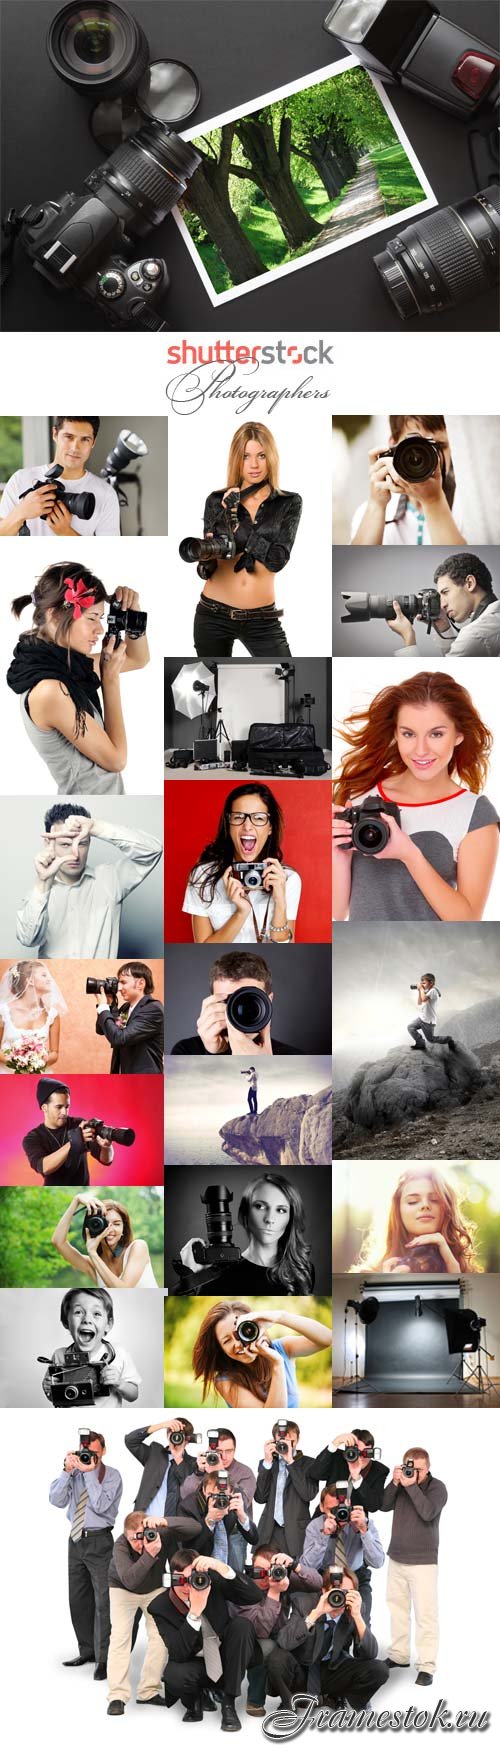 Stock photos photographers